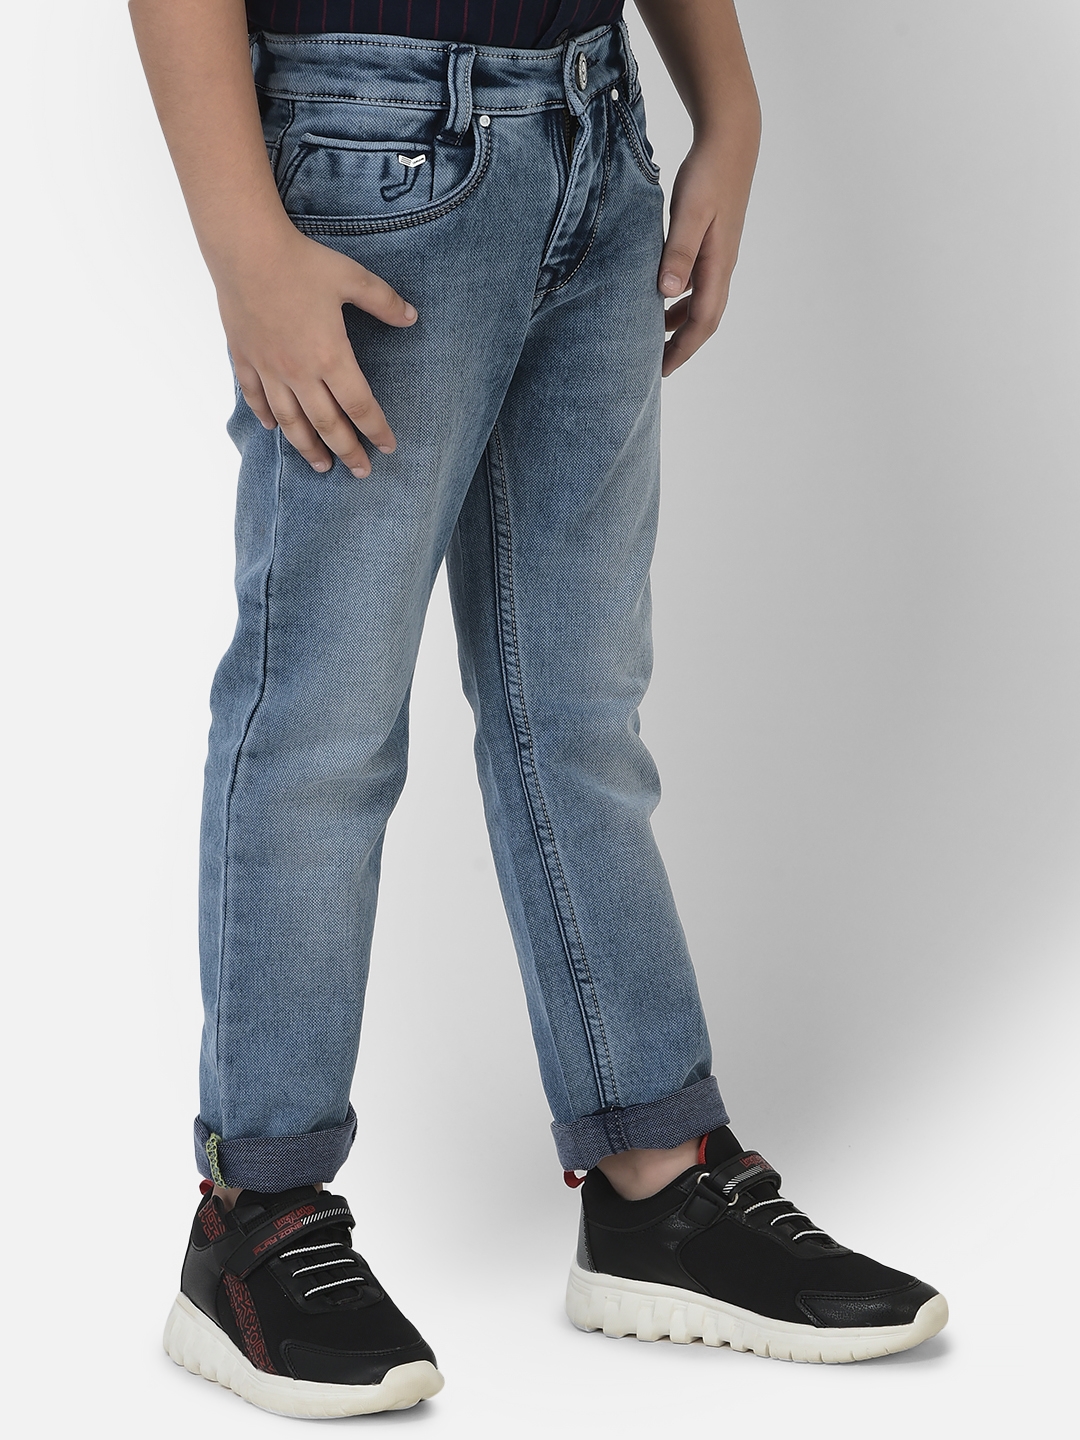 Crimsoune Club Boy Blue Jeans in Light Wash Detail 